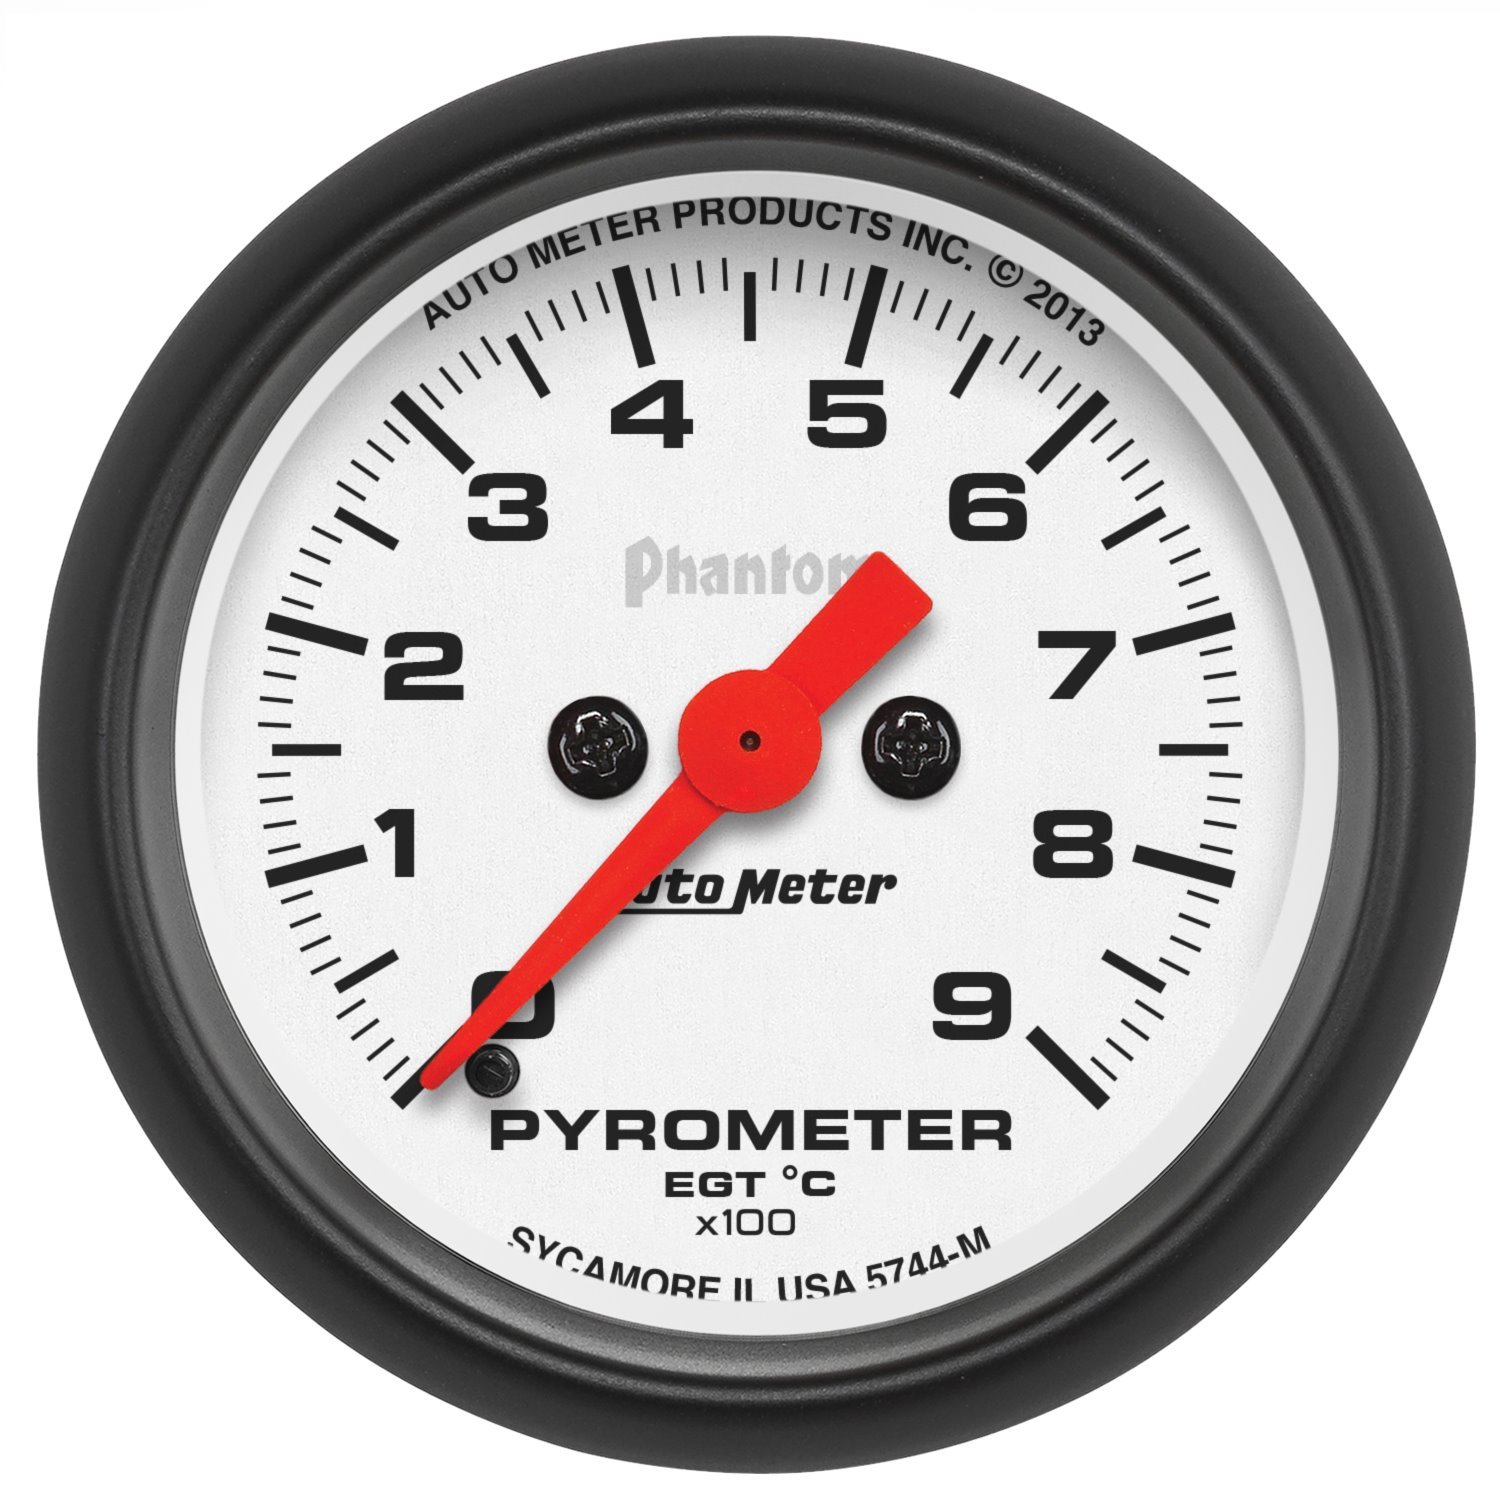 Phantom Pyrometer 2-1/16" electrical